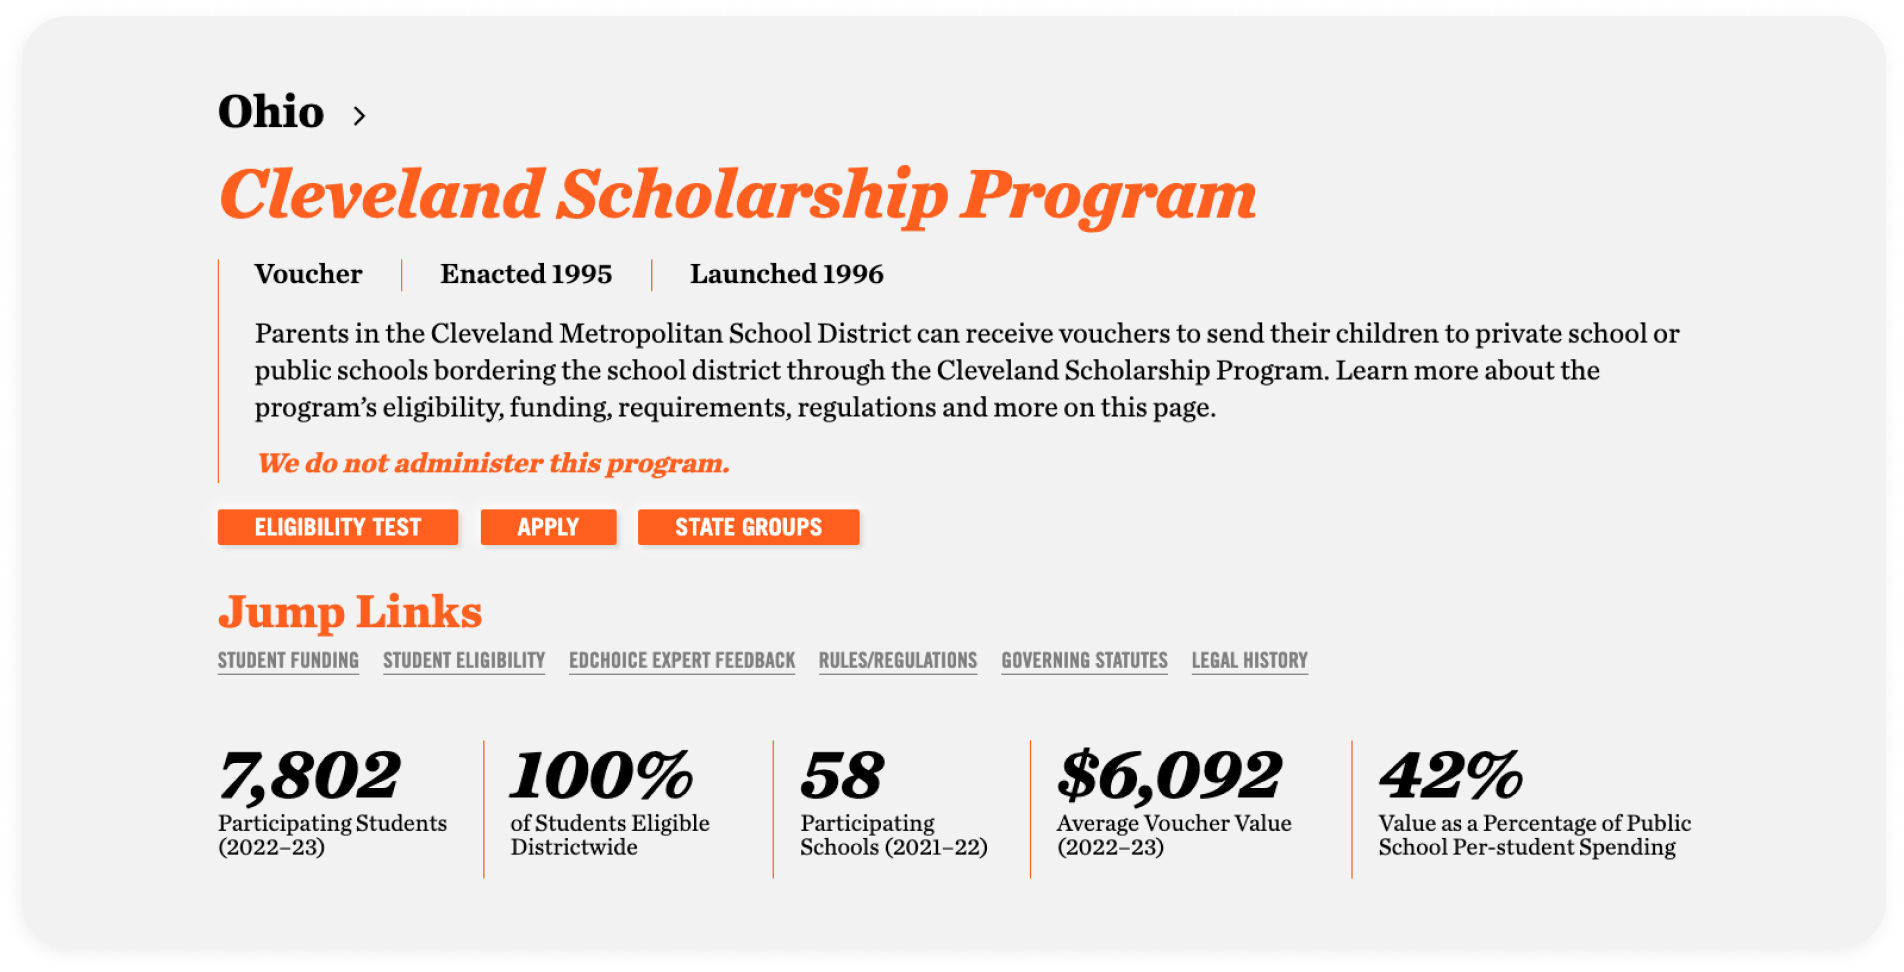 Screenshot of Ohio Cleveland Scholarship Program page from EdChoice